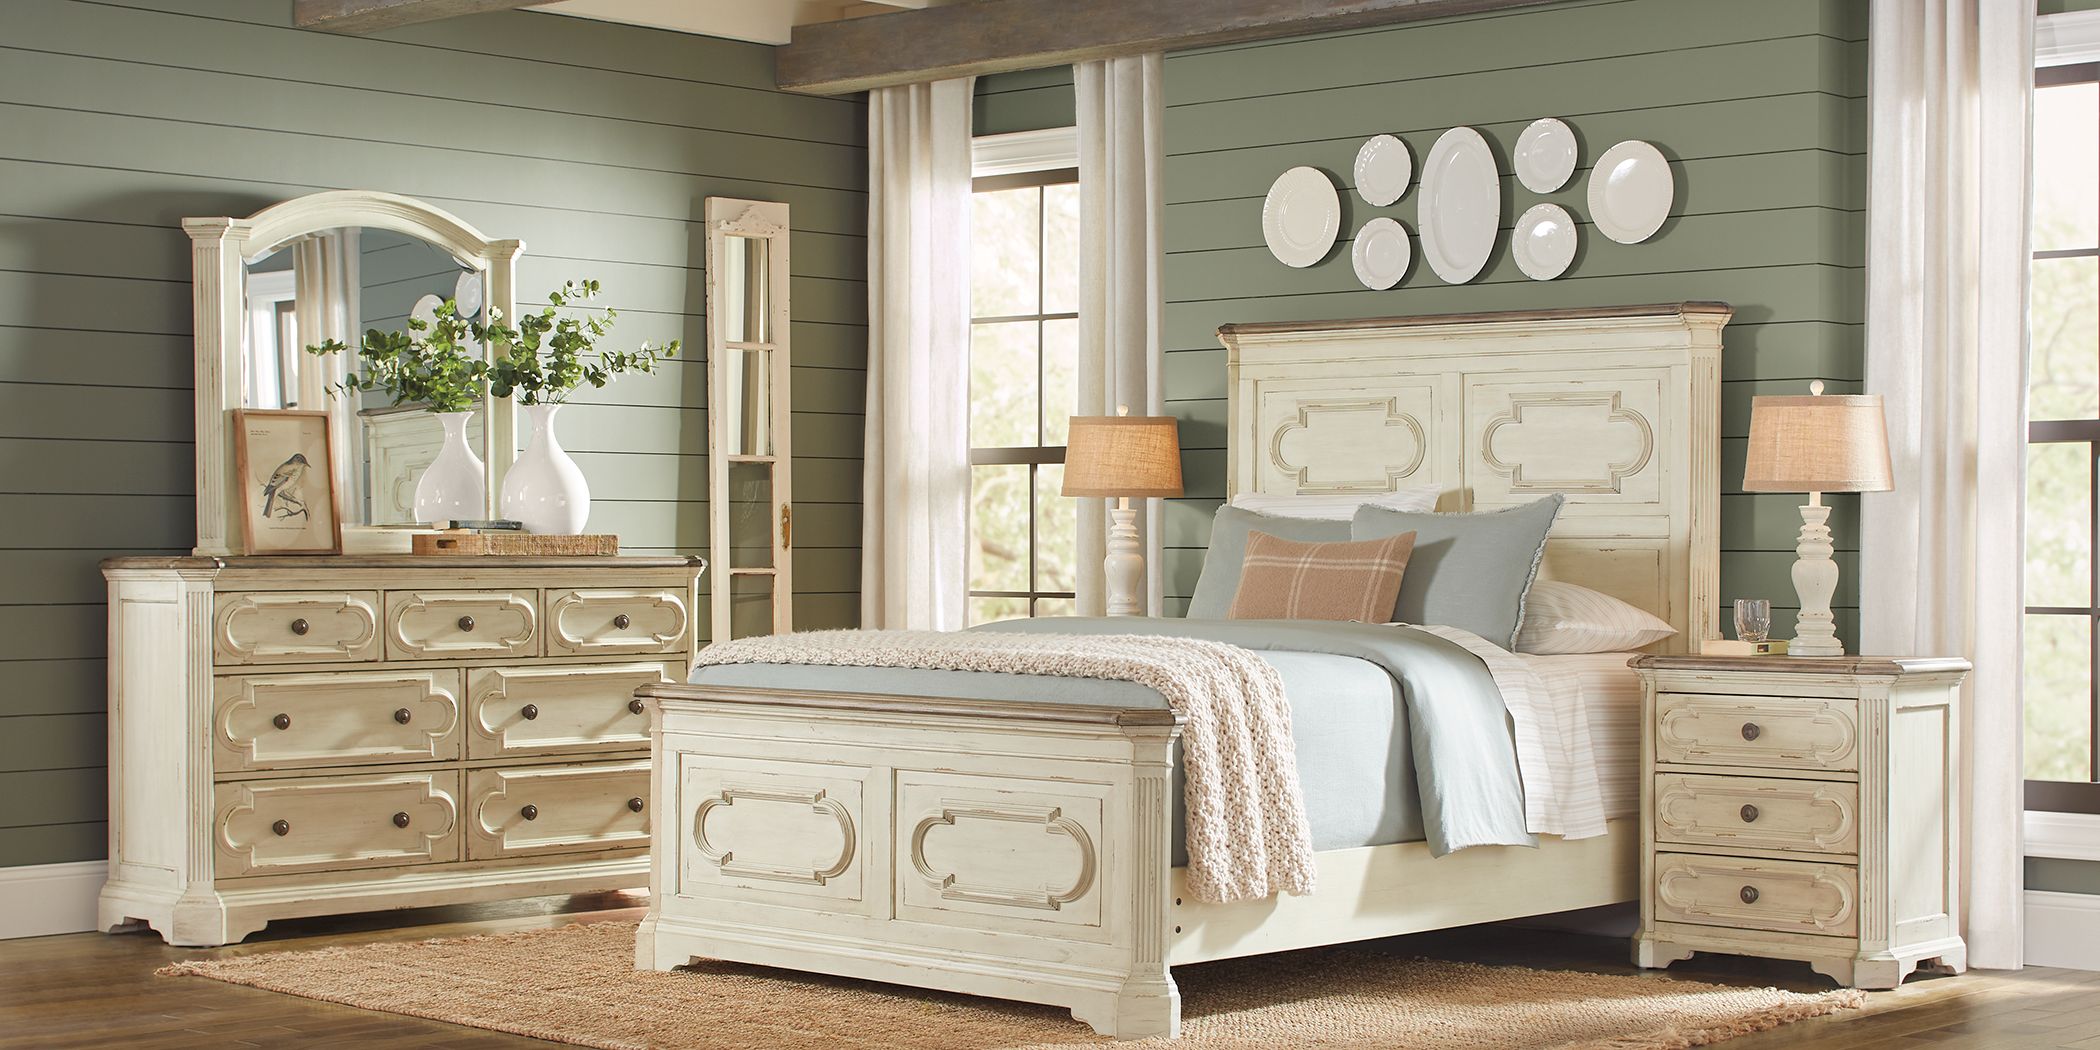 girls white bedroom furniture for sale